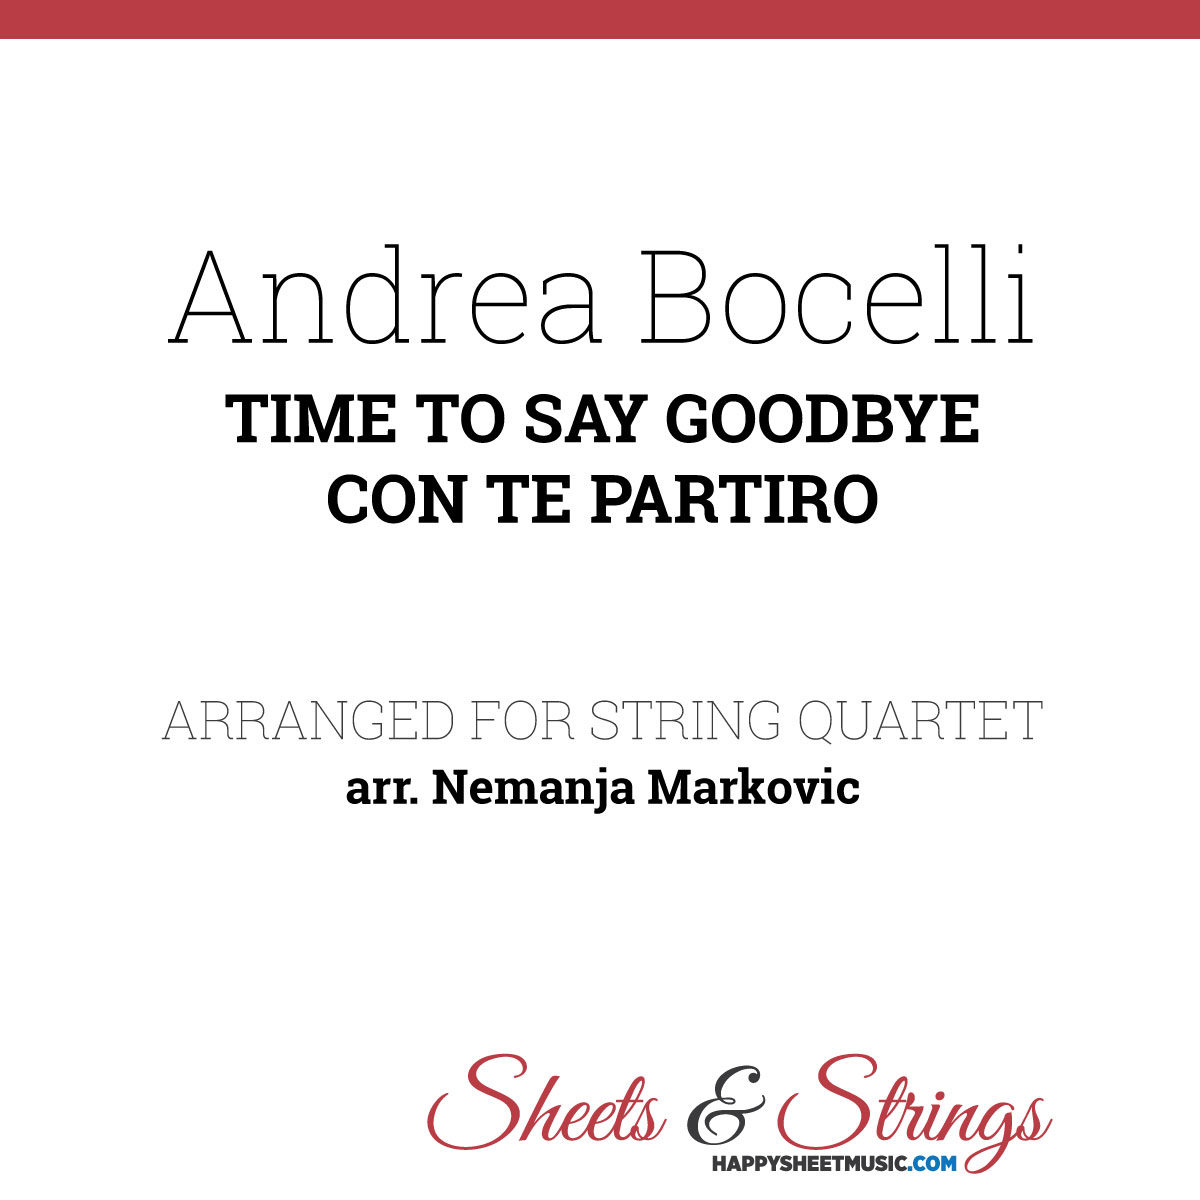 Andrea Bocelli - Time To Say Goodbye ( Con Te Partiro ) - Sheet Music for String Quartet - Music Arrangement for String Quartet